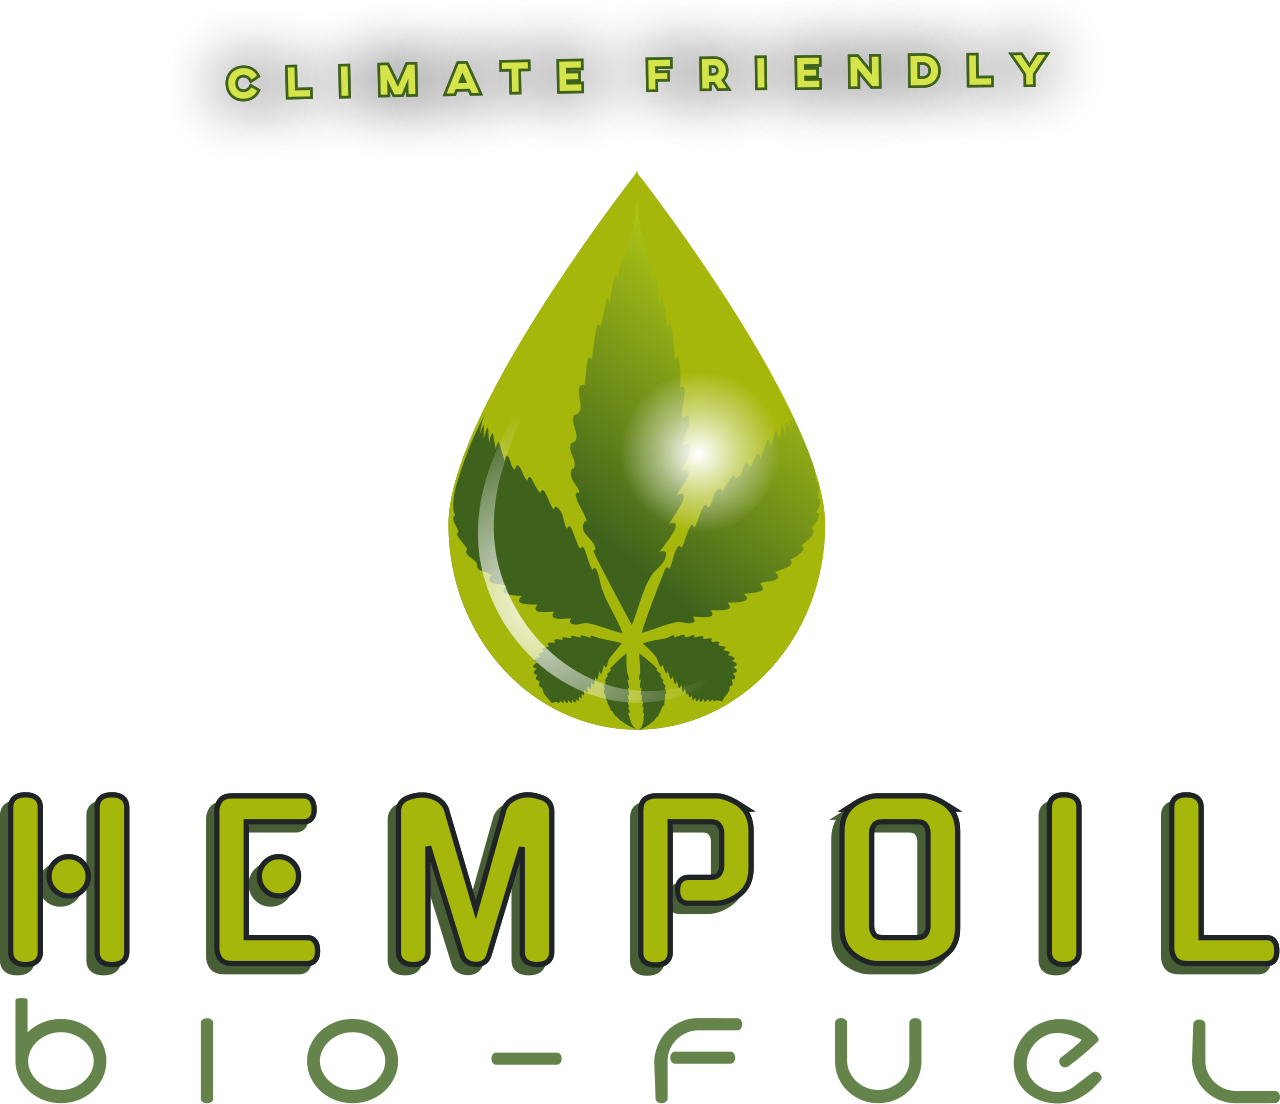 Hempoil's web page